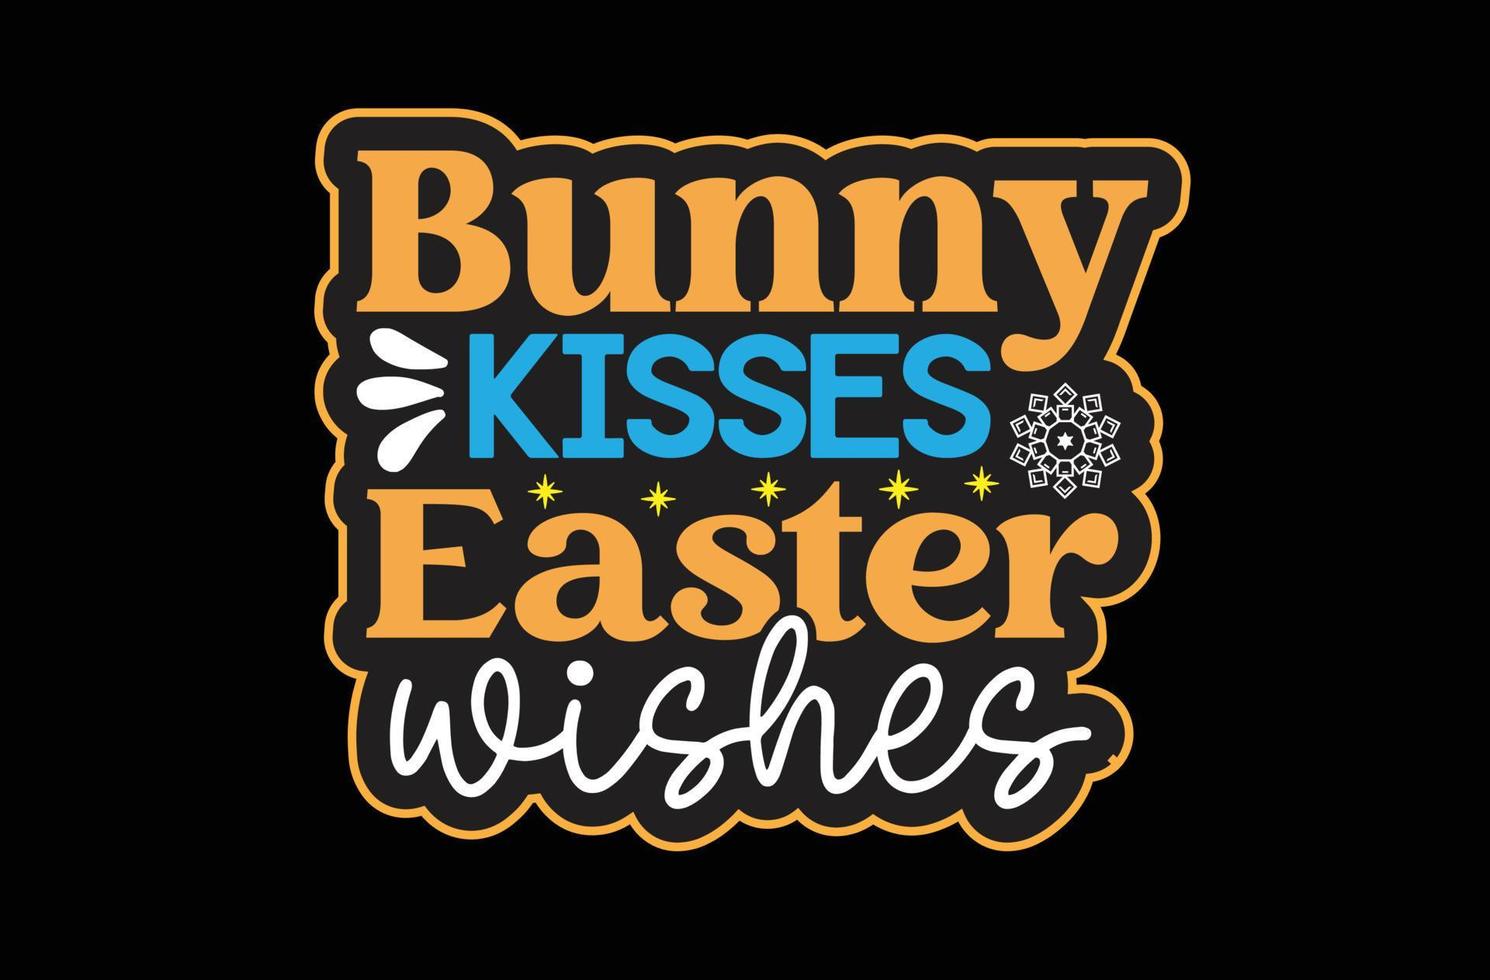 Bunny Kisses Easter Wishes svg sticker design vector